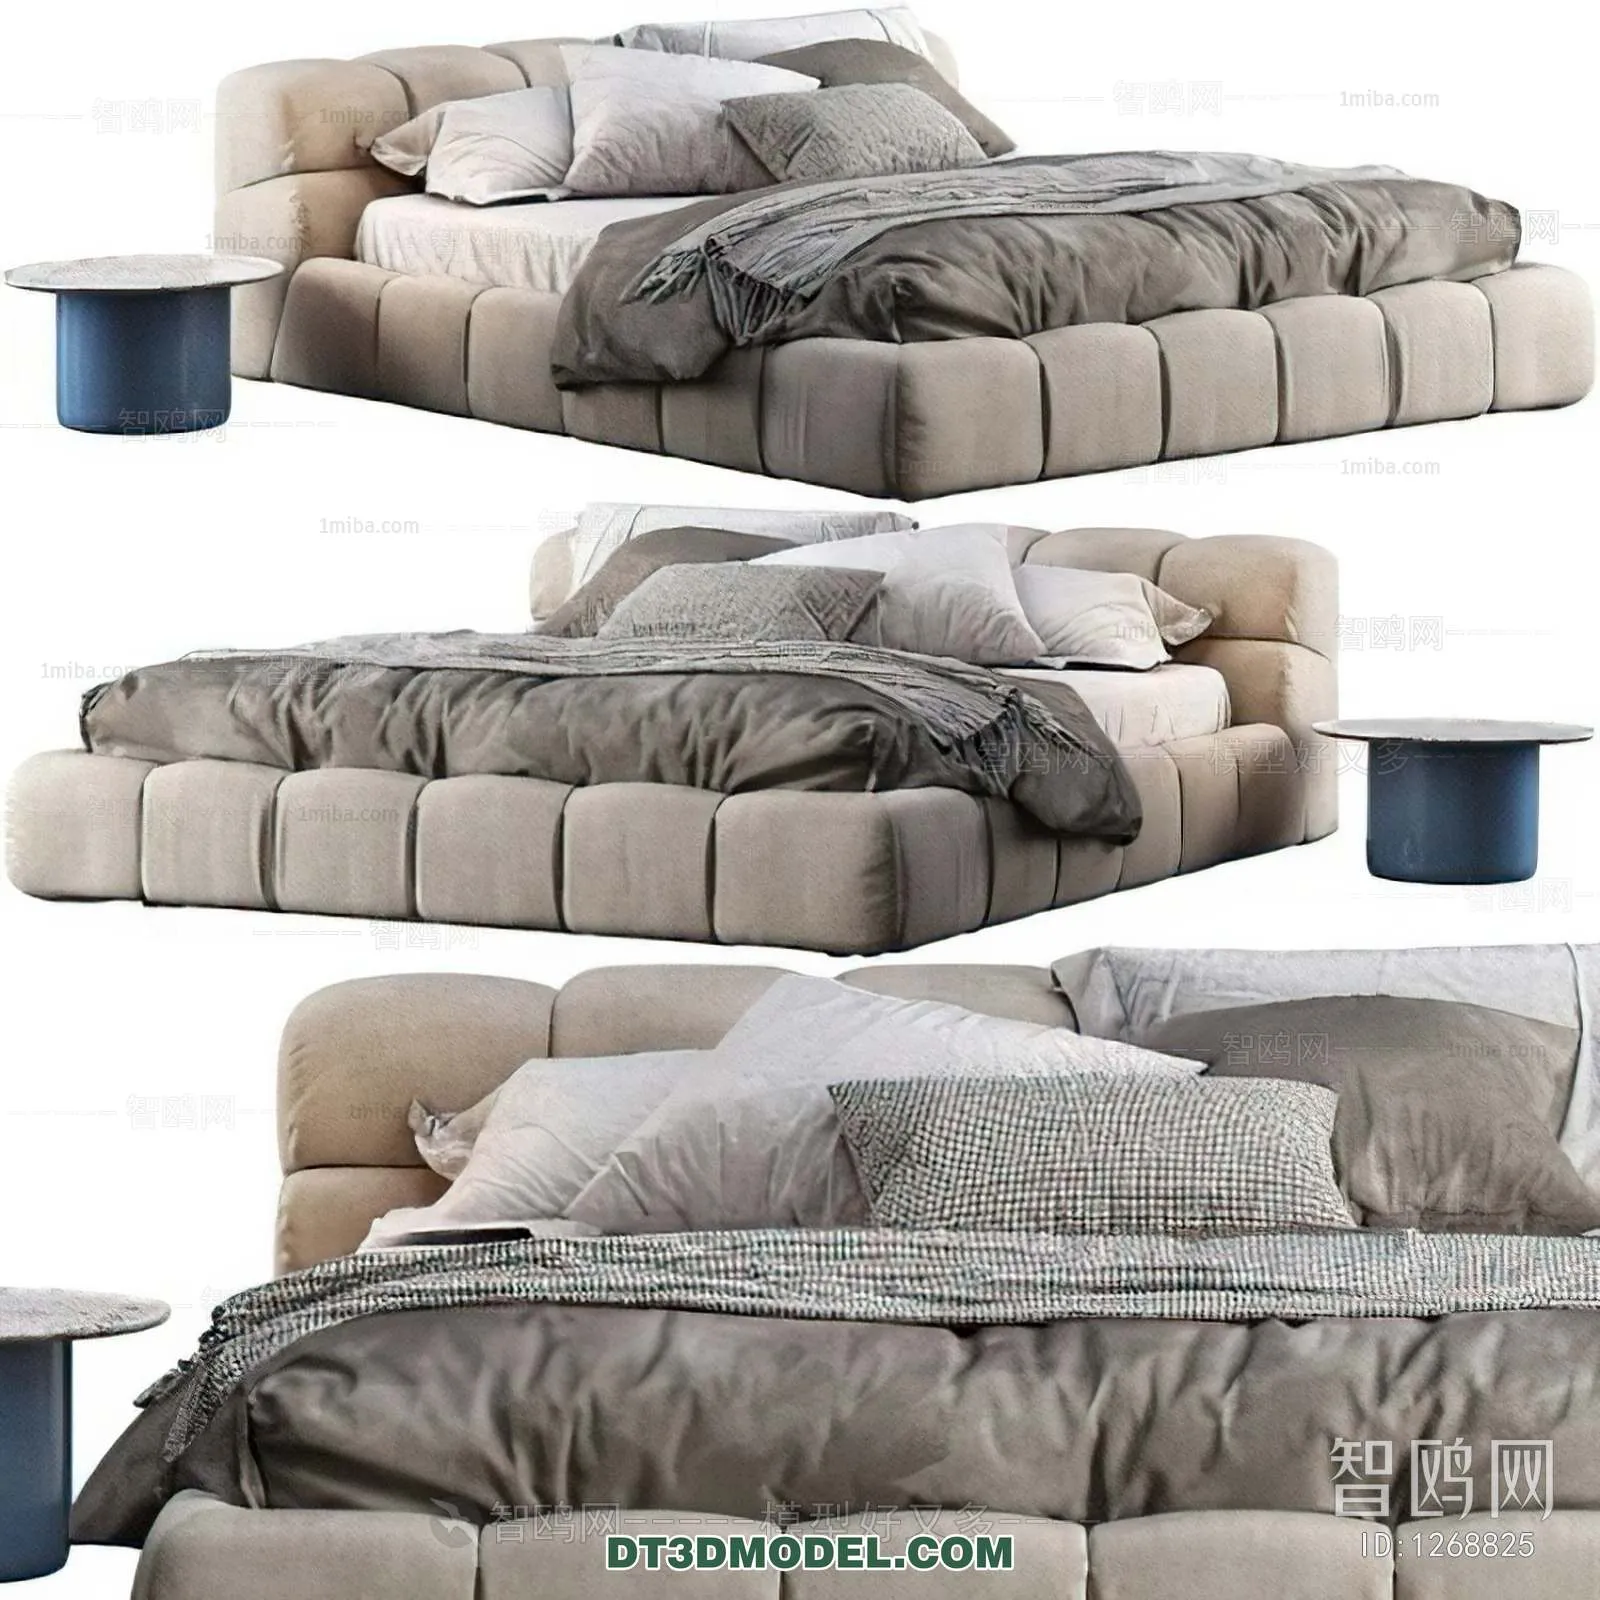 Double Bed 3D Models – 0079